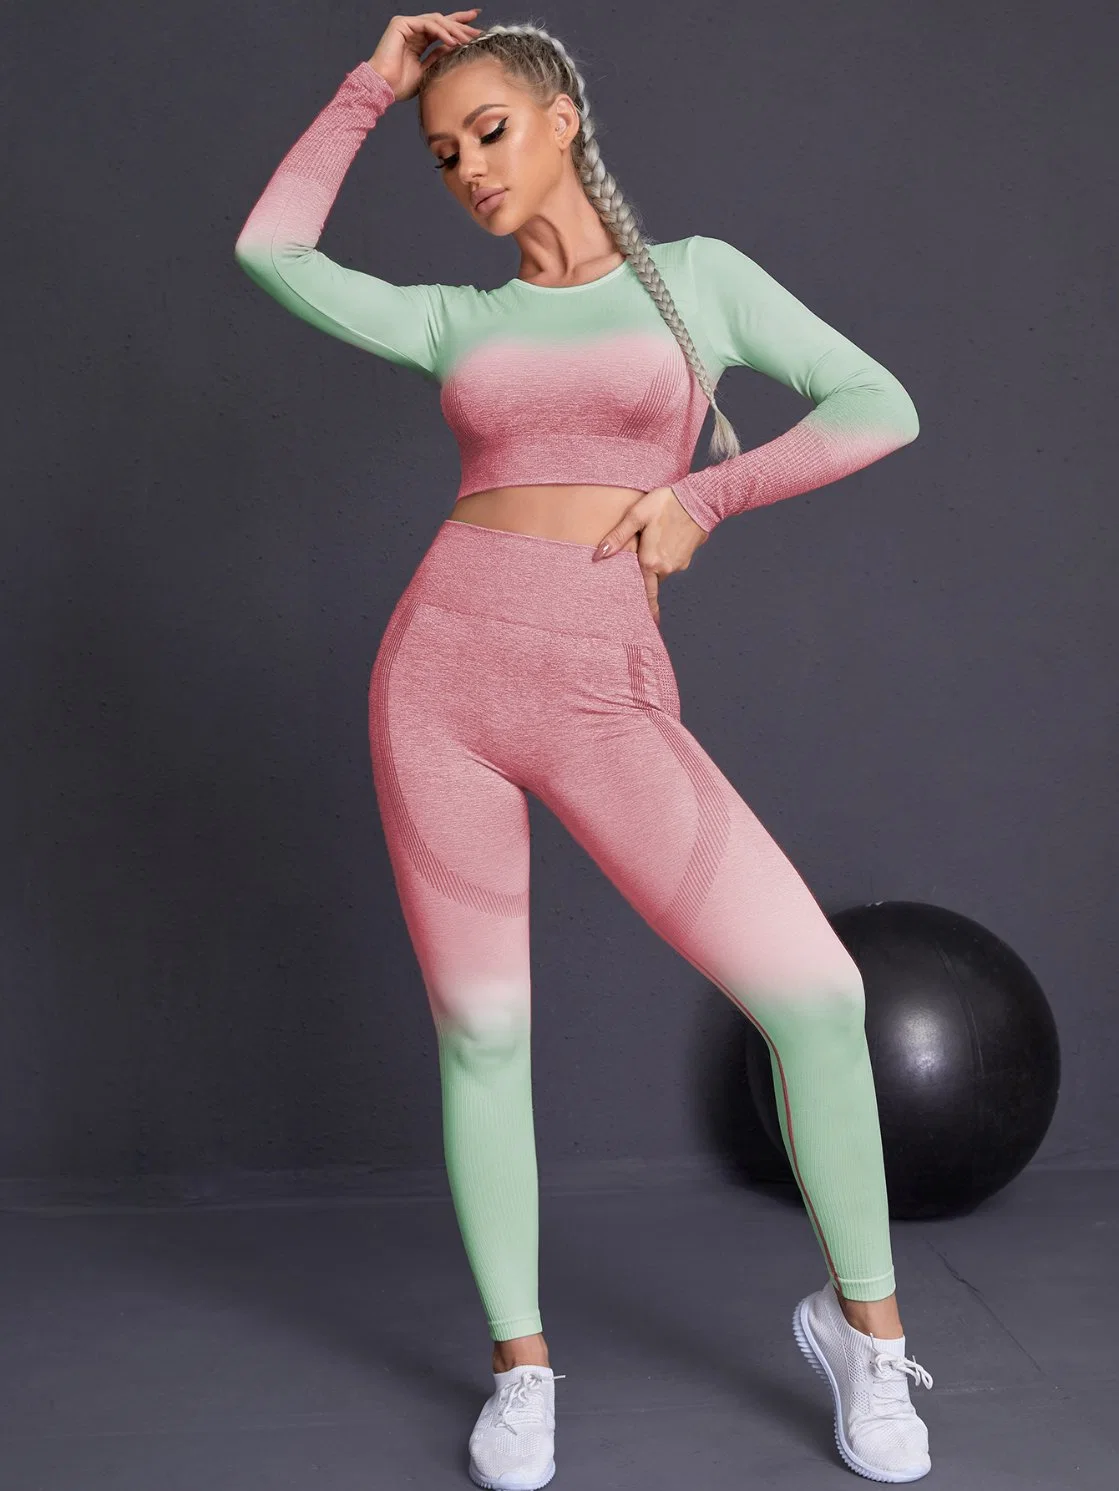 Women Long Sleeve Crop Top + Workout Clothes Fitness Bra Outfit Active Wear Gym Suits Sport High Waist Leggings Seamless Yoga Set Wear